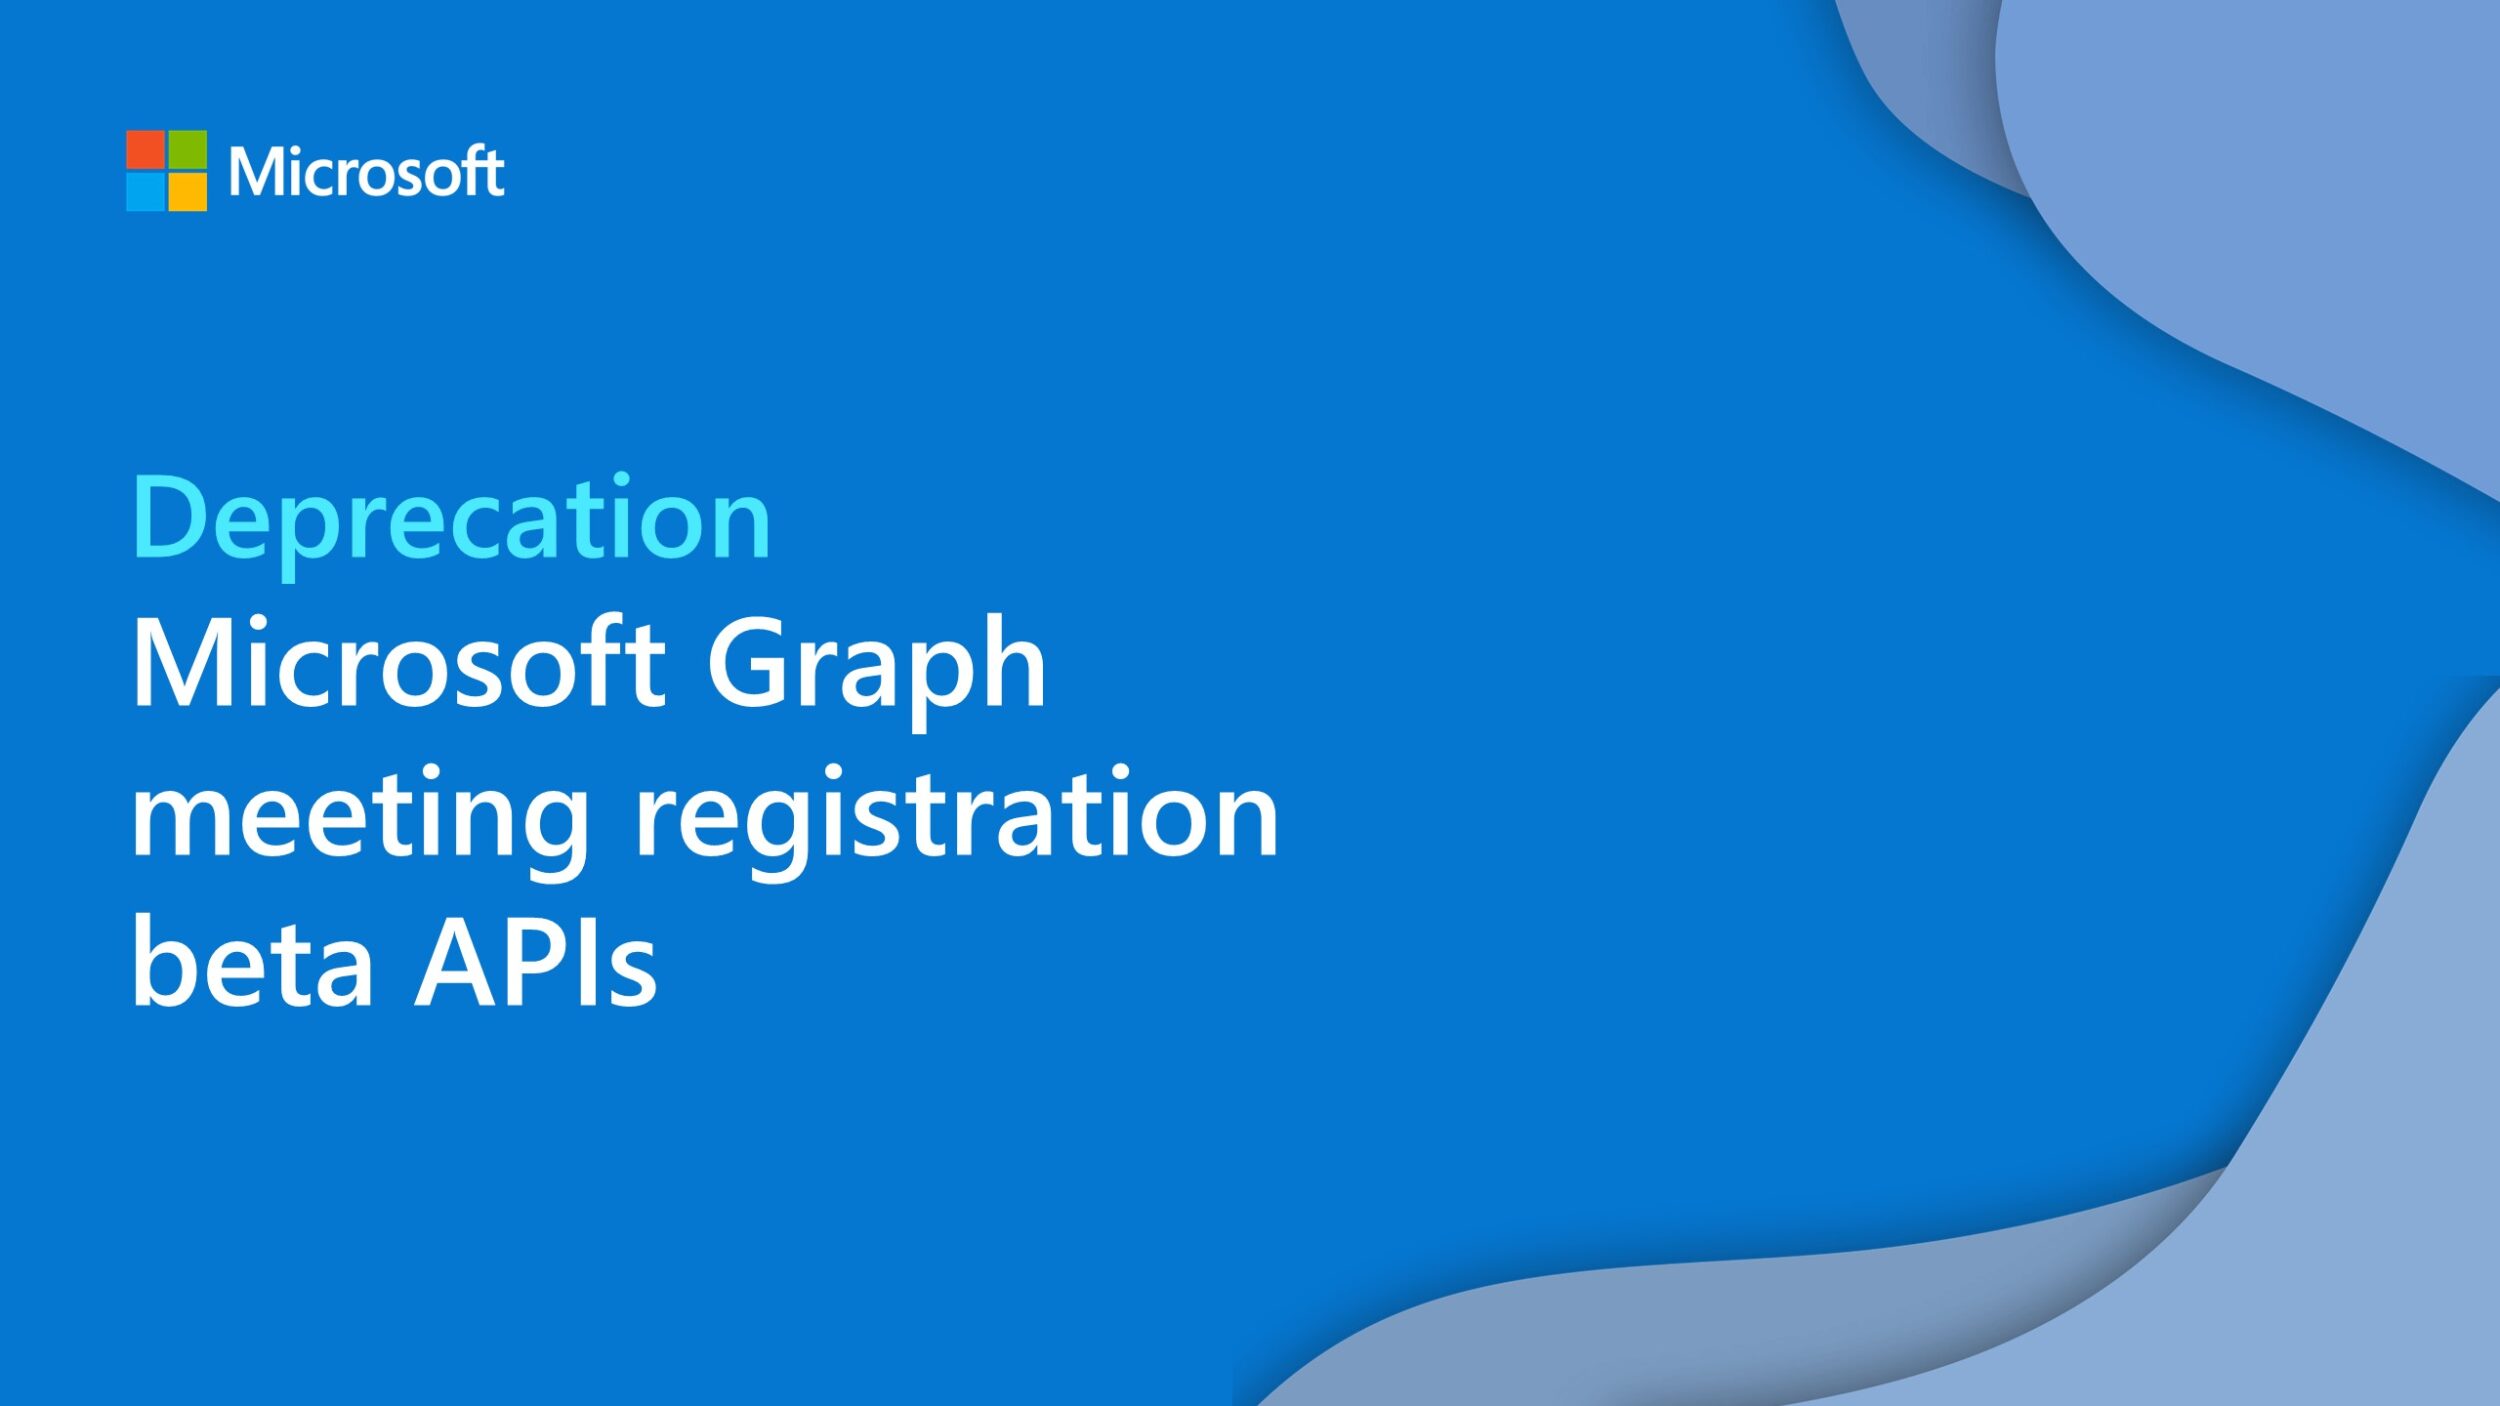 Deprecation of the Microsoft Graph meeting registration beta APIs